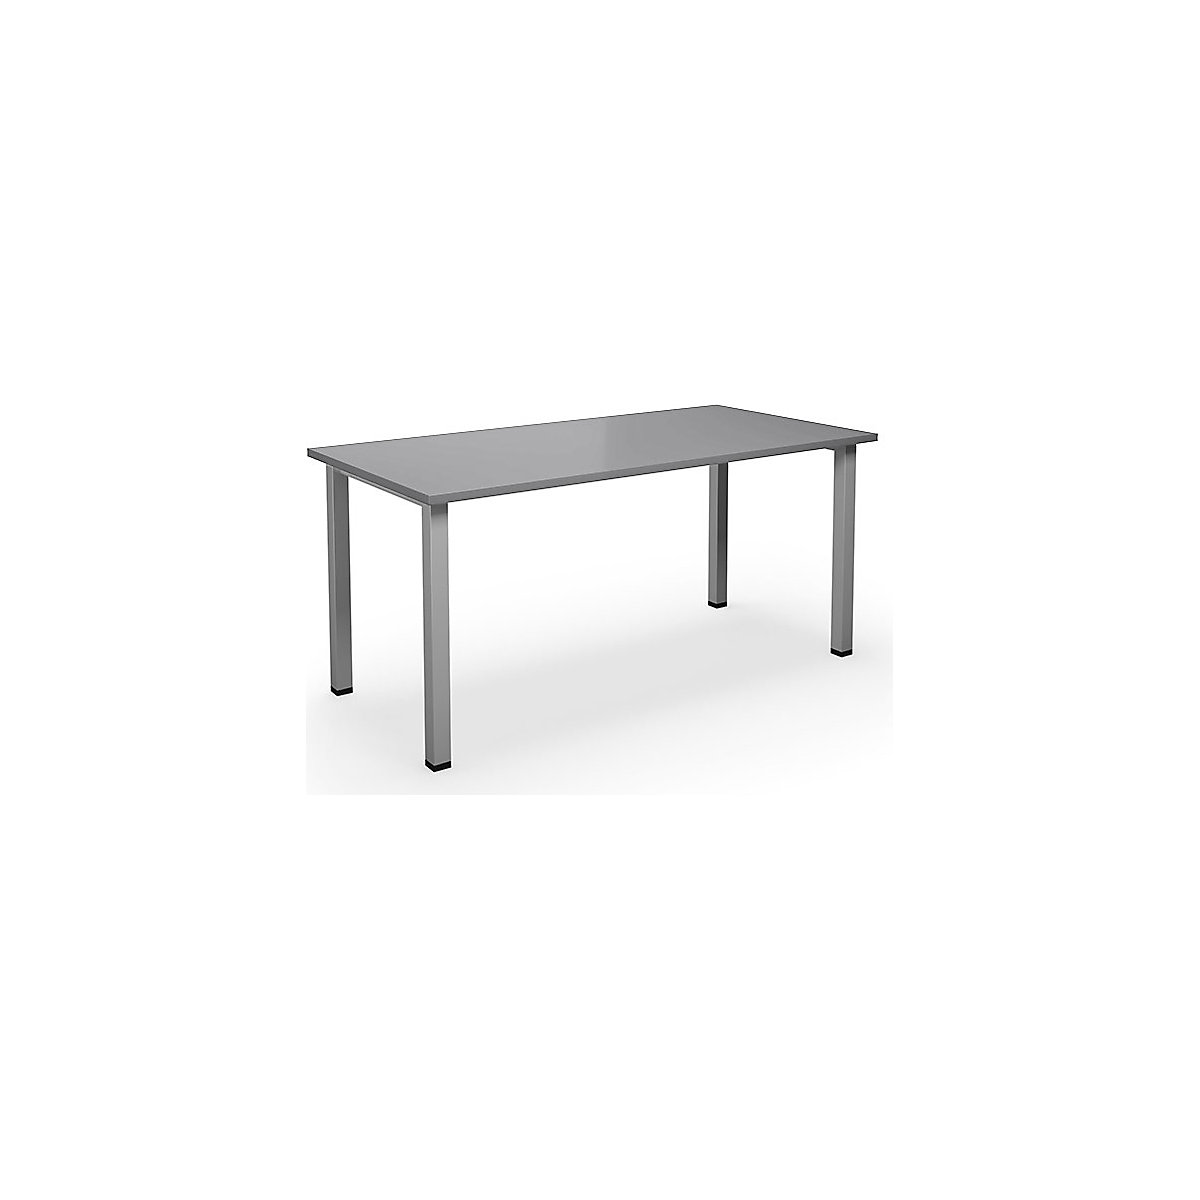 DUO-U multi-purpose desk, straight tabletop, WxD 1600 x 800 mm, light grey, silver-6